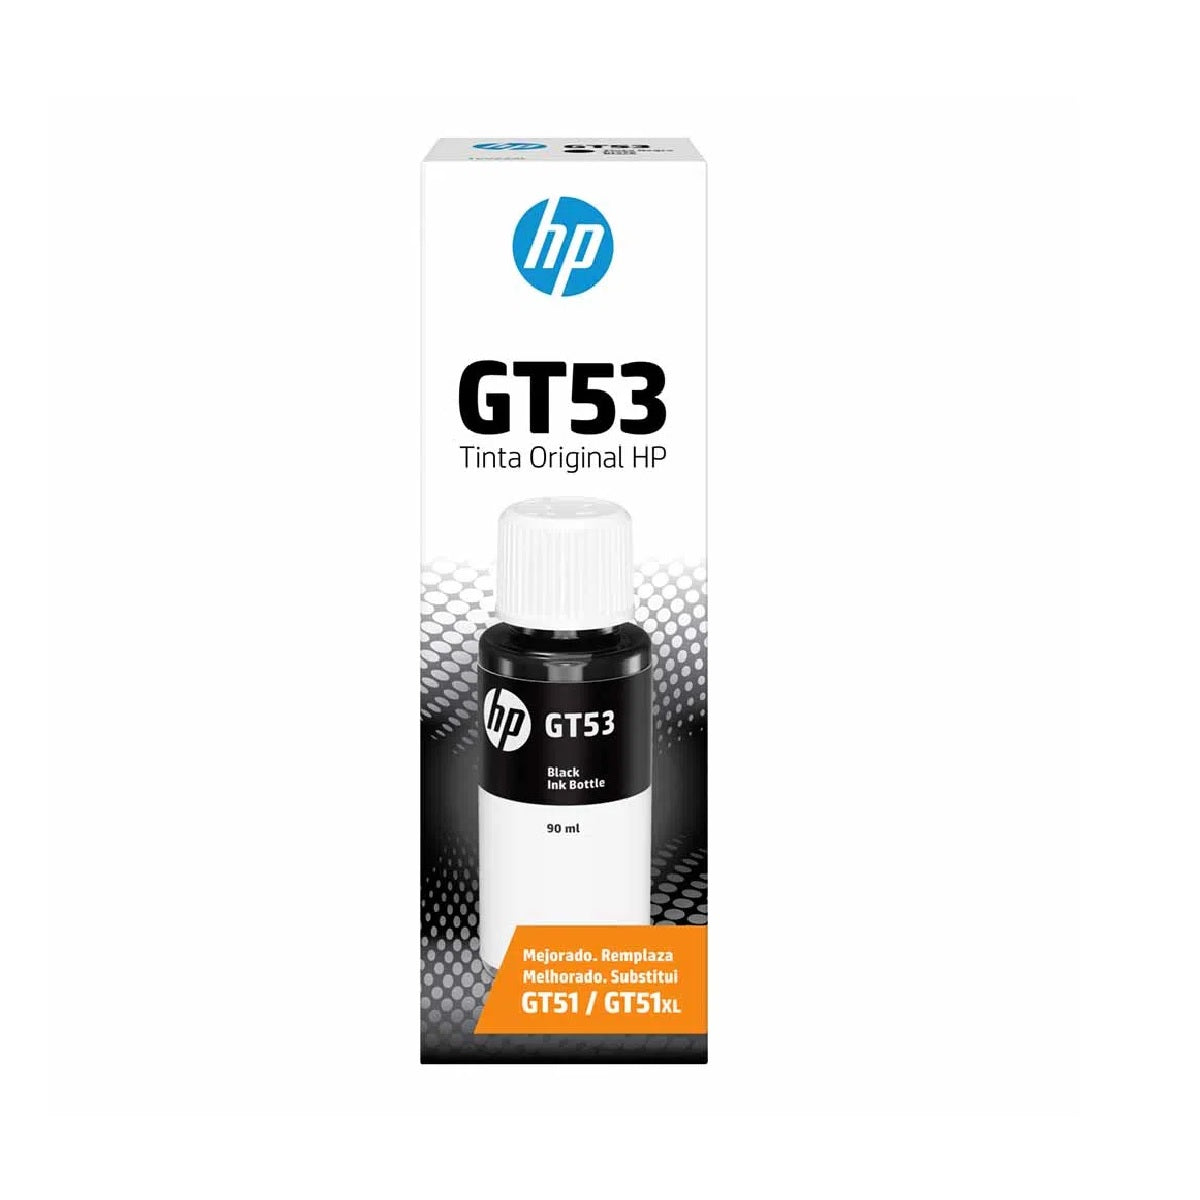 Tinta HP GT53- Sistema Continuo, Black - PERU DATA